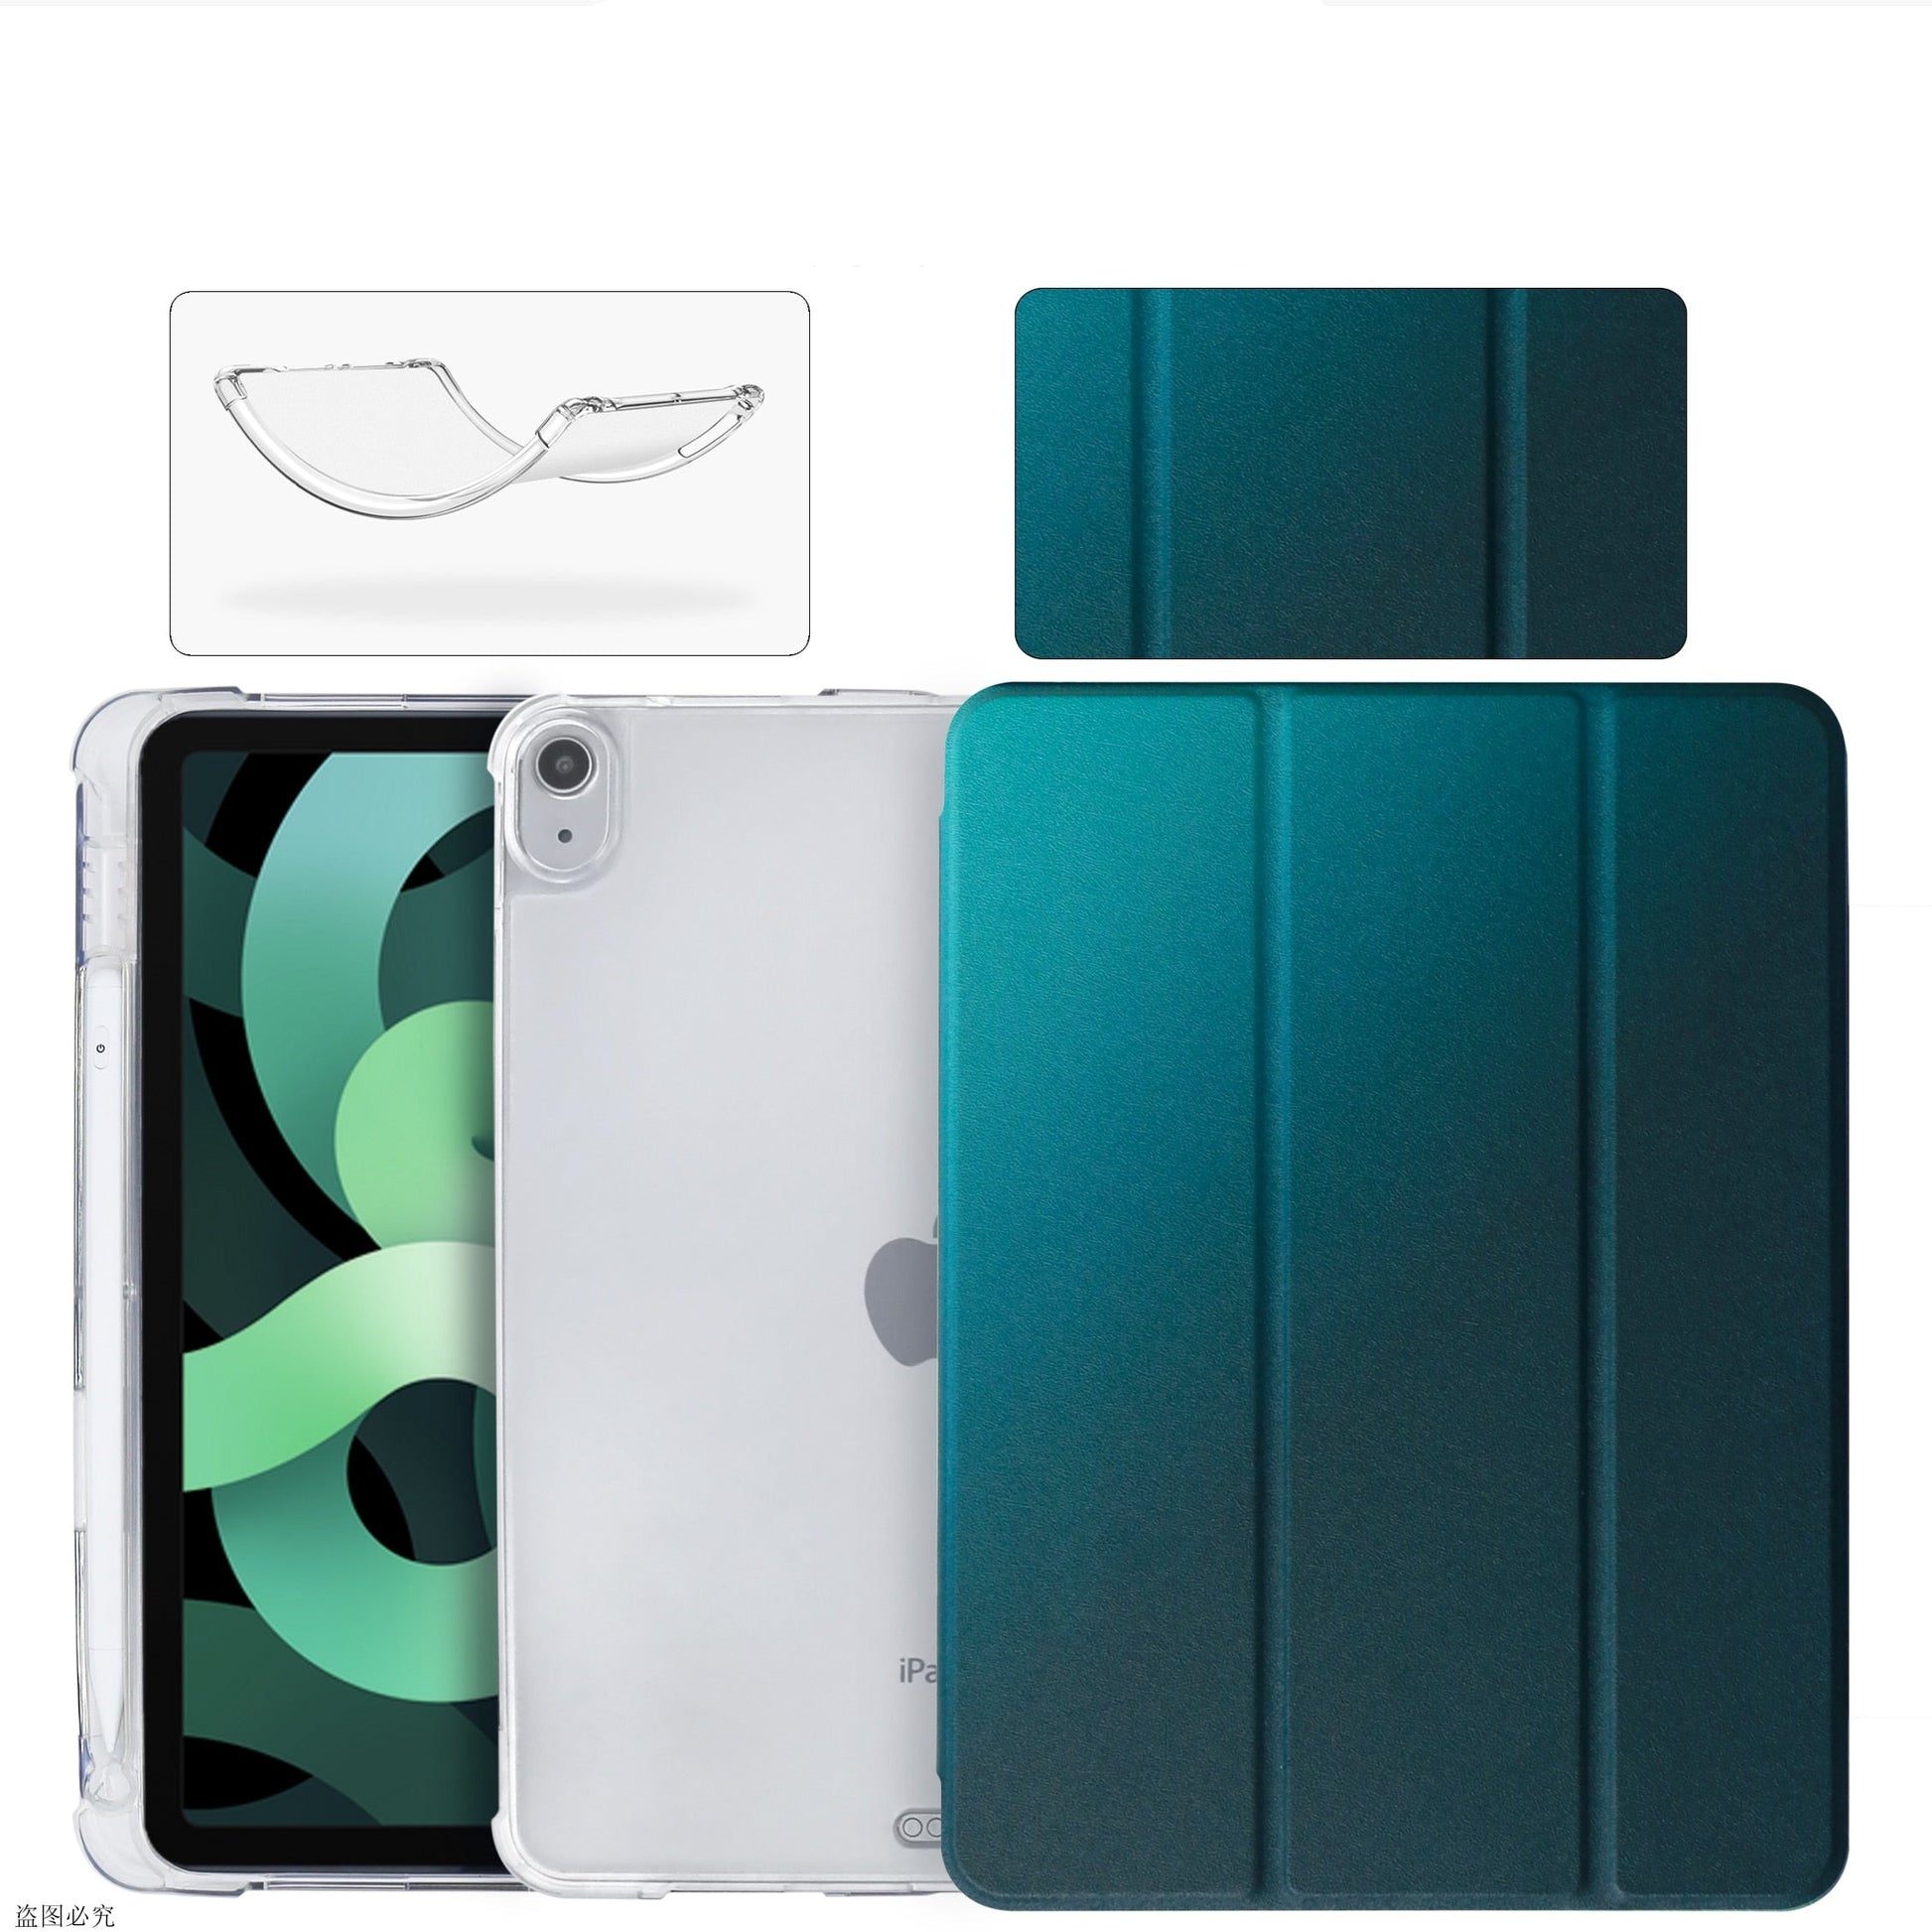 Designer Chrome iPad Cases – Tabletory